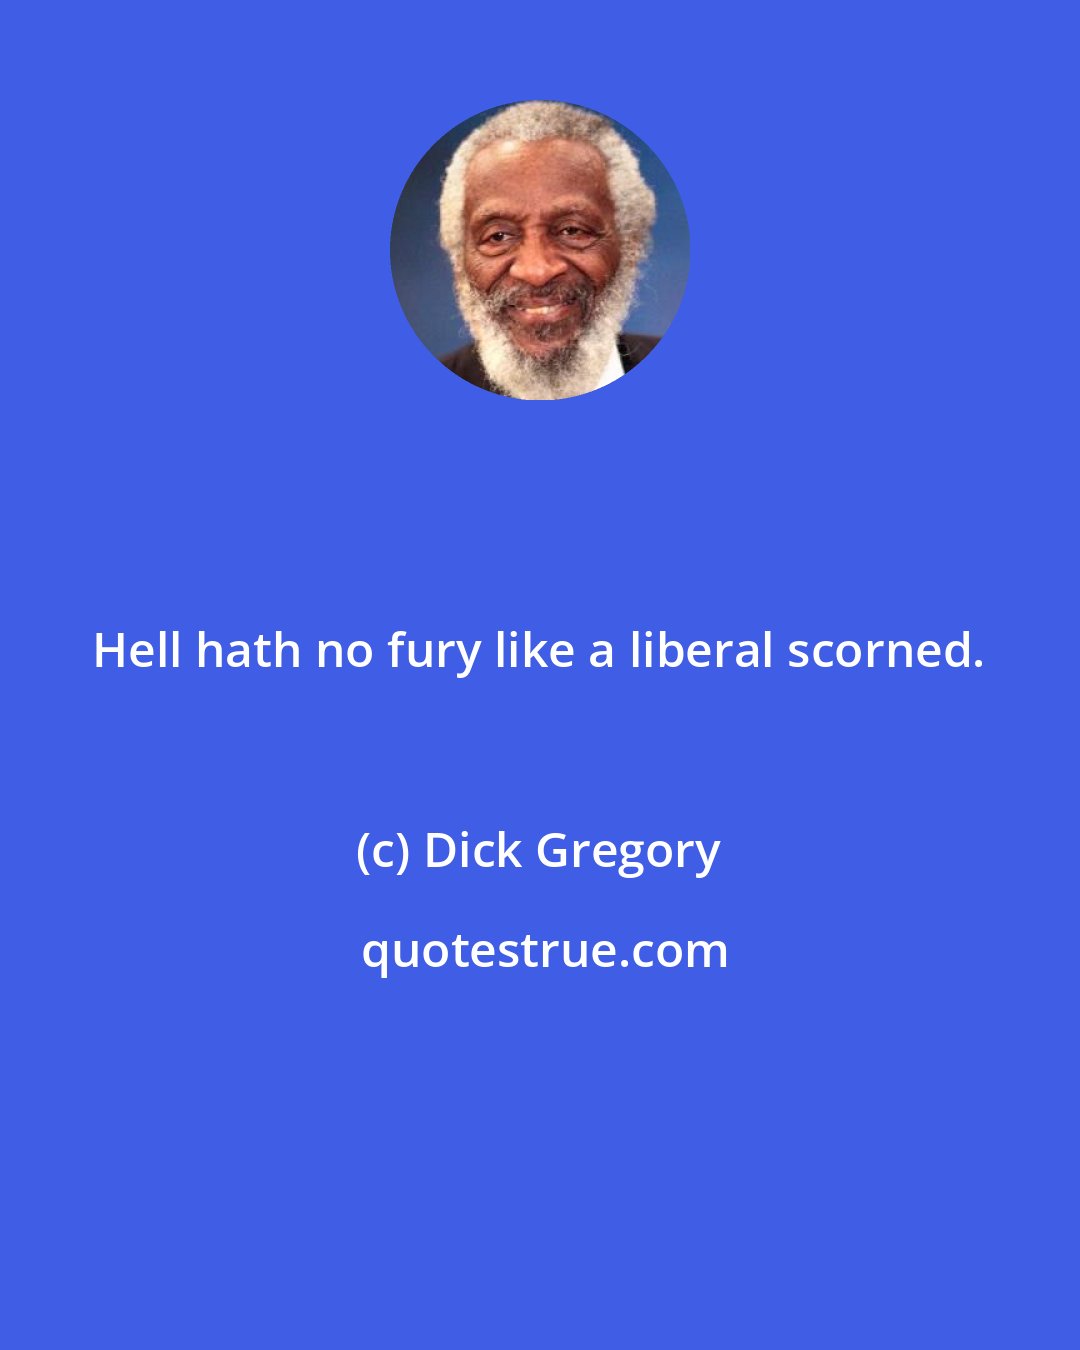 Dick Gregory: Hell hath no fury like a liberal scorned.